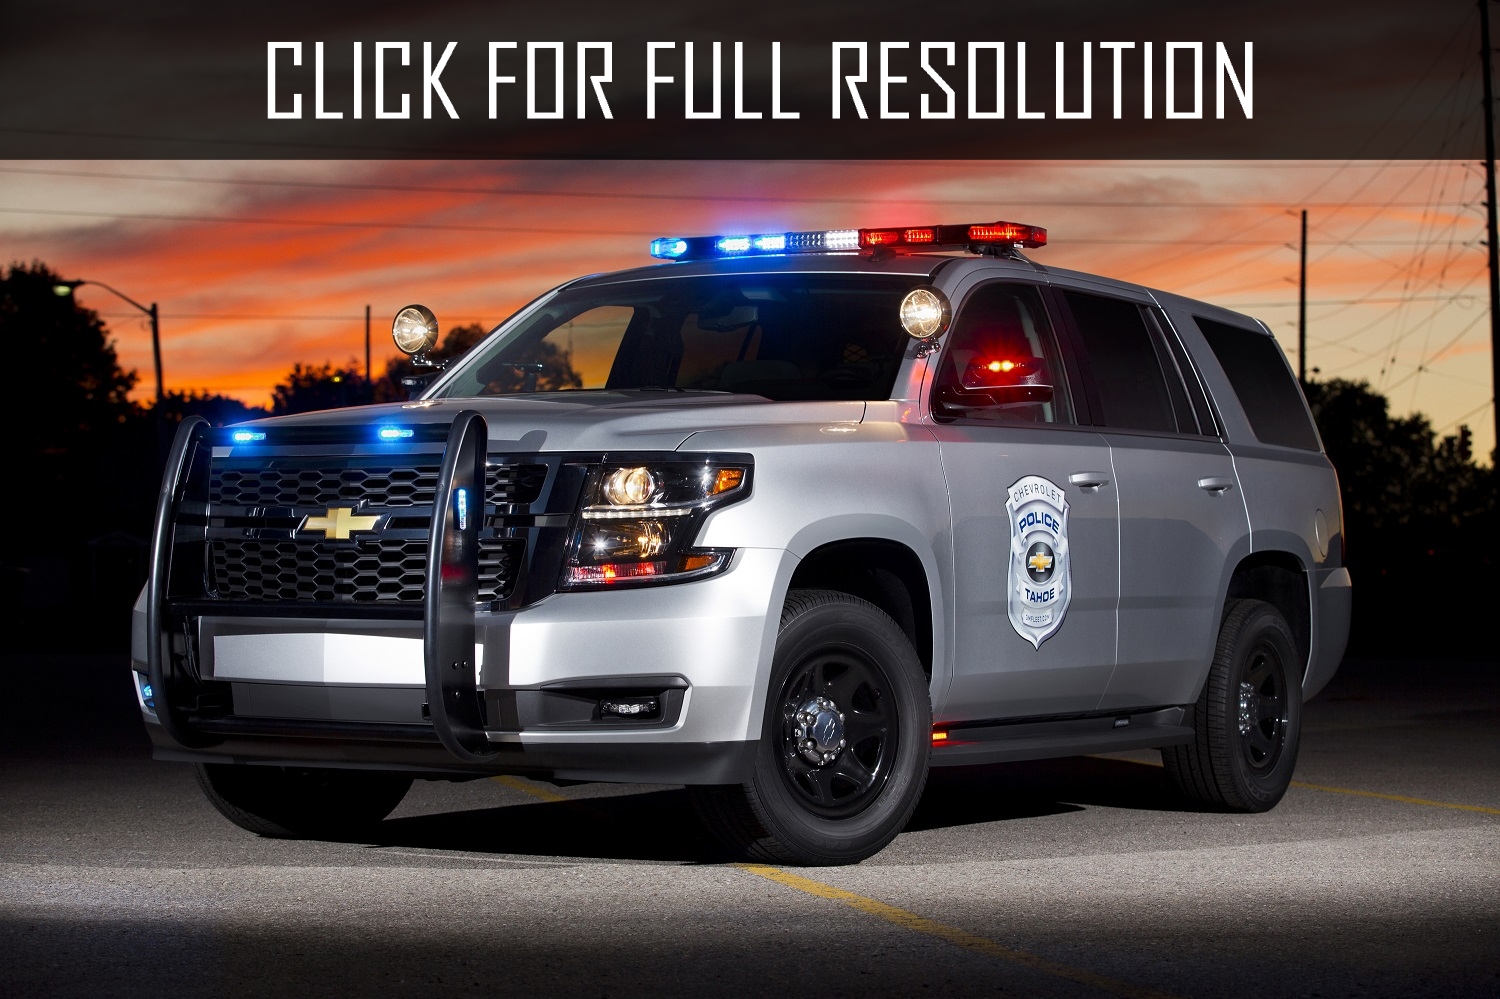 Chevrolet Tahoe Police